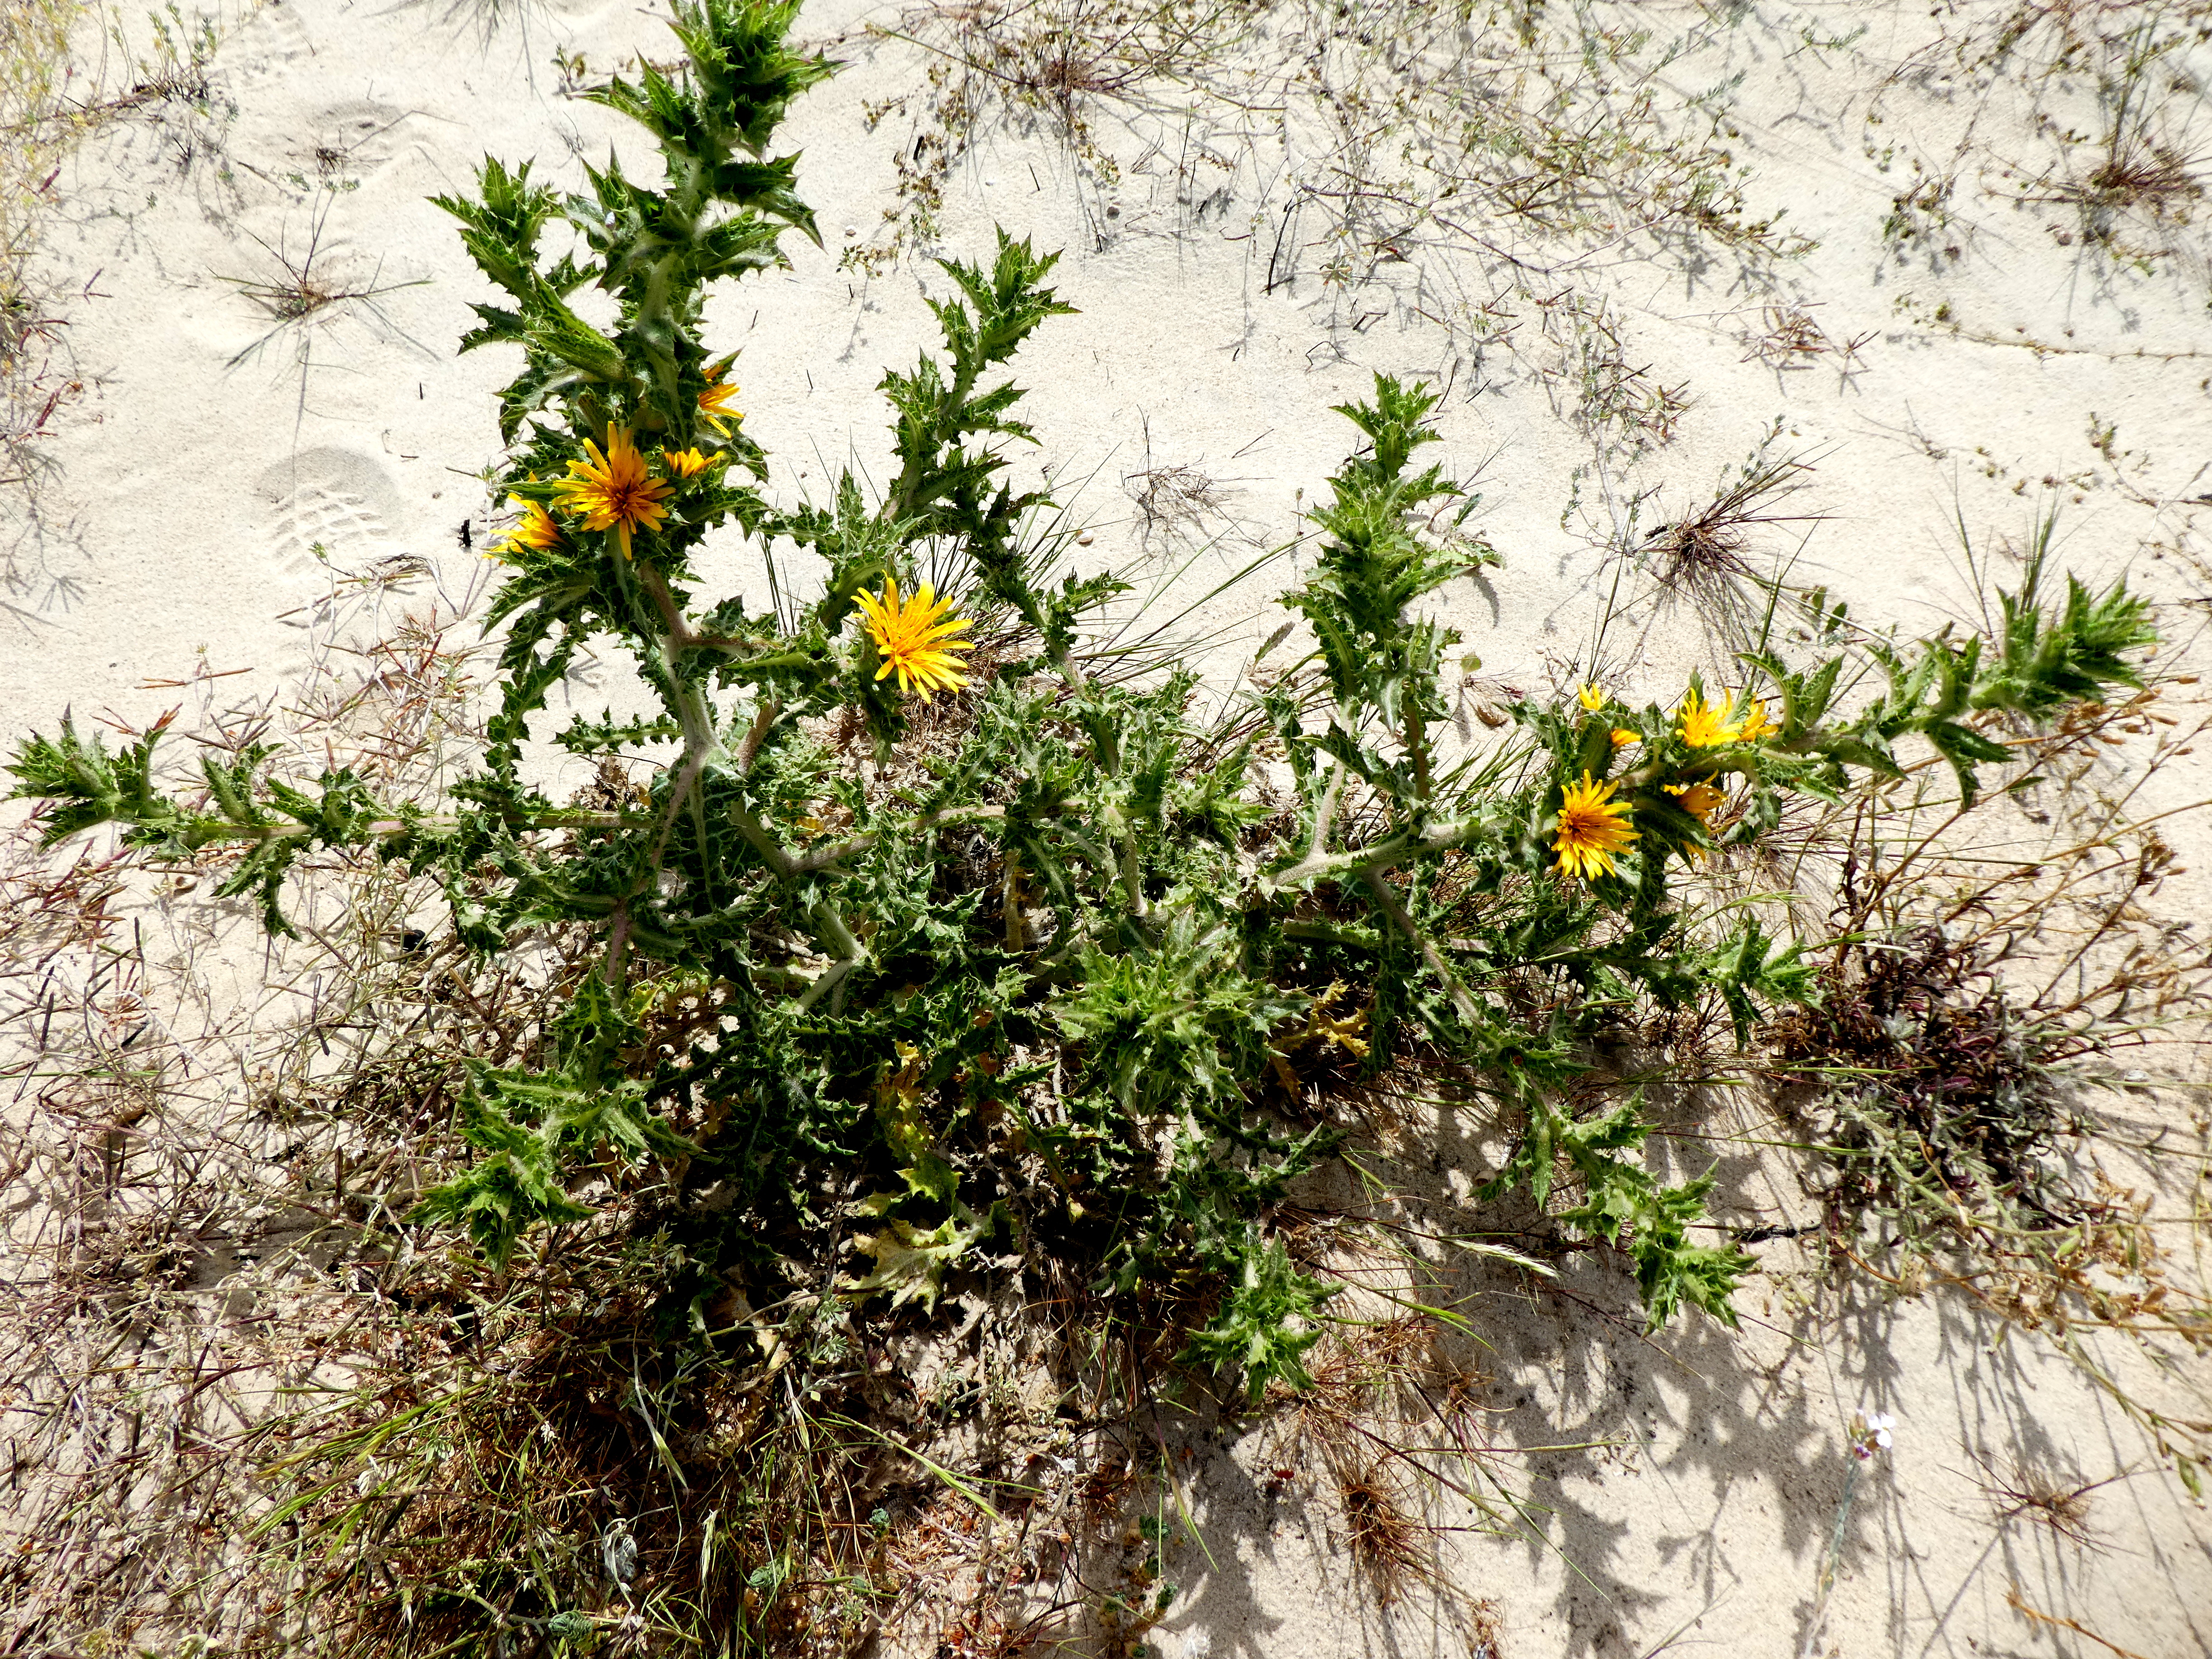 Scolymus hispanicus